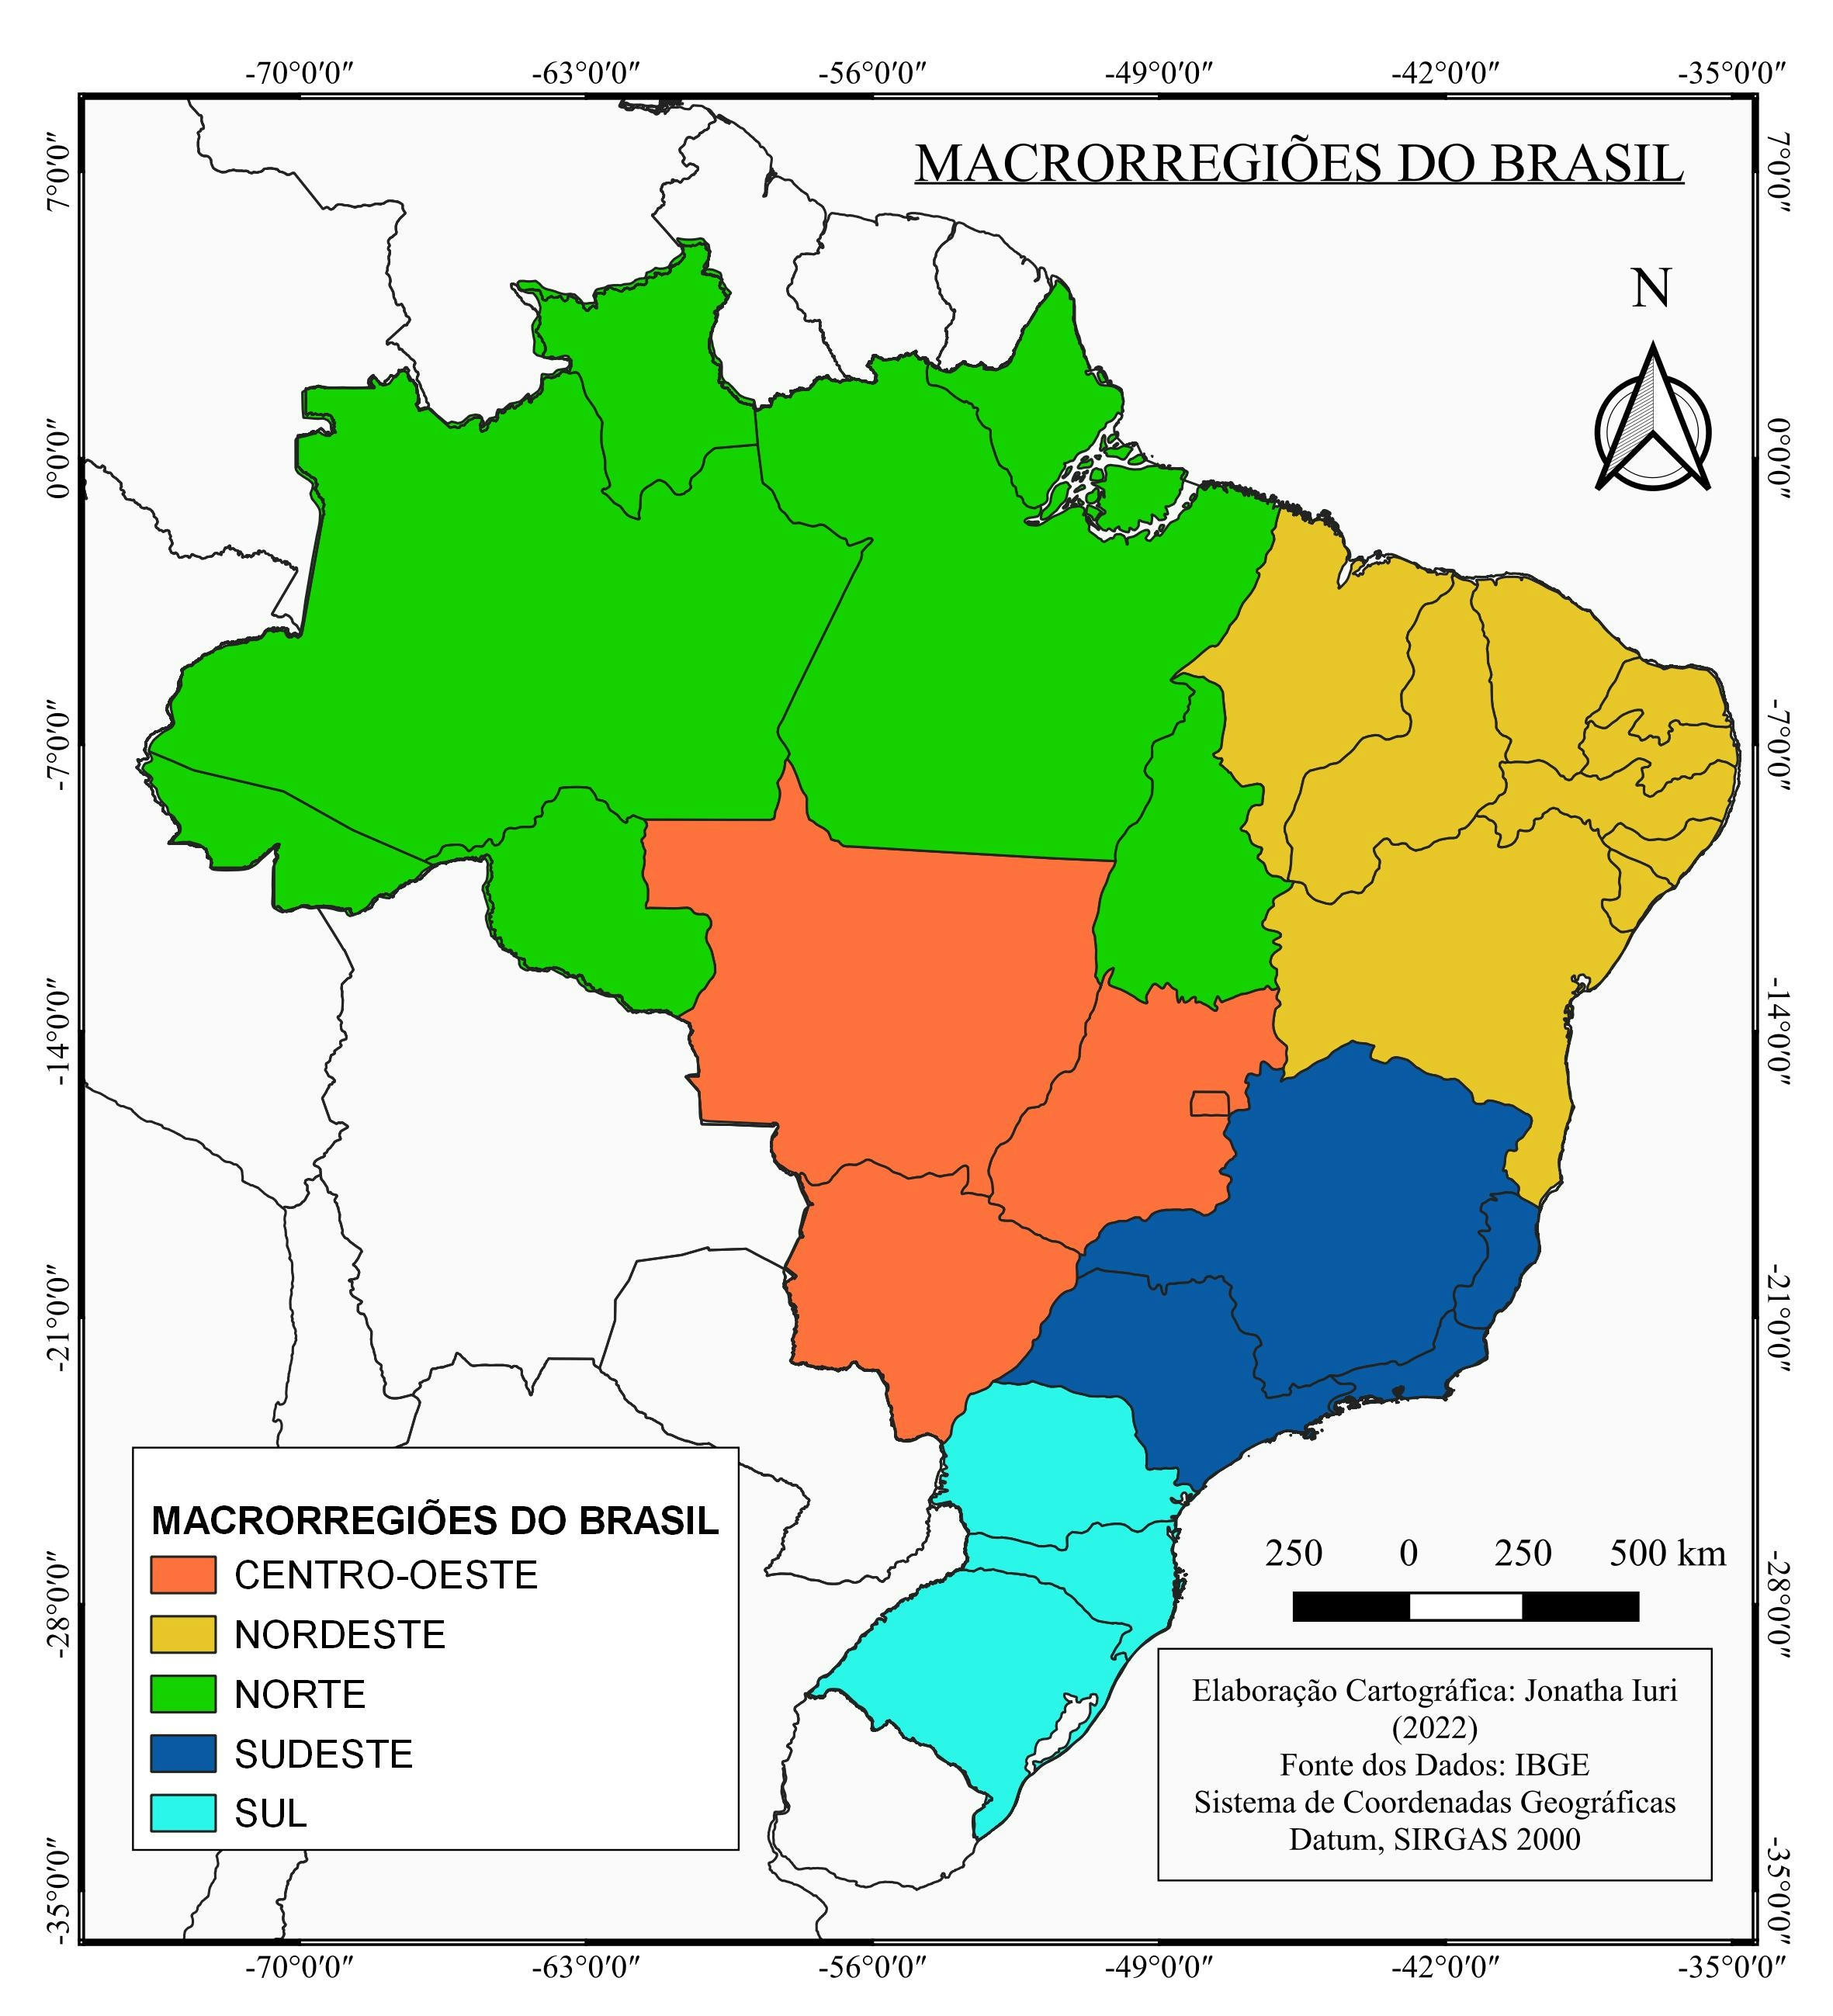 MAPA DAS MACRORREGIOES DO BRASIL